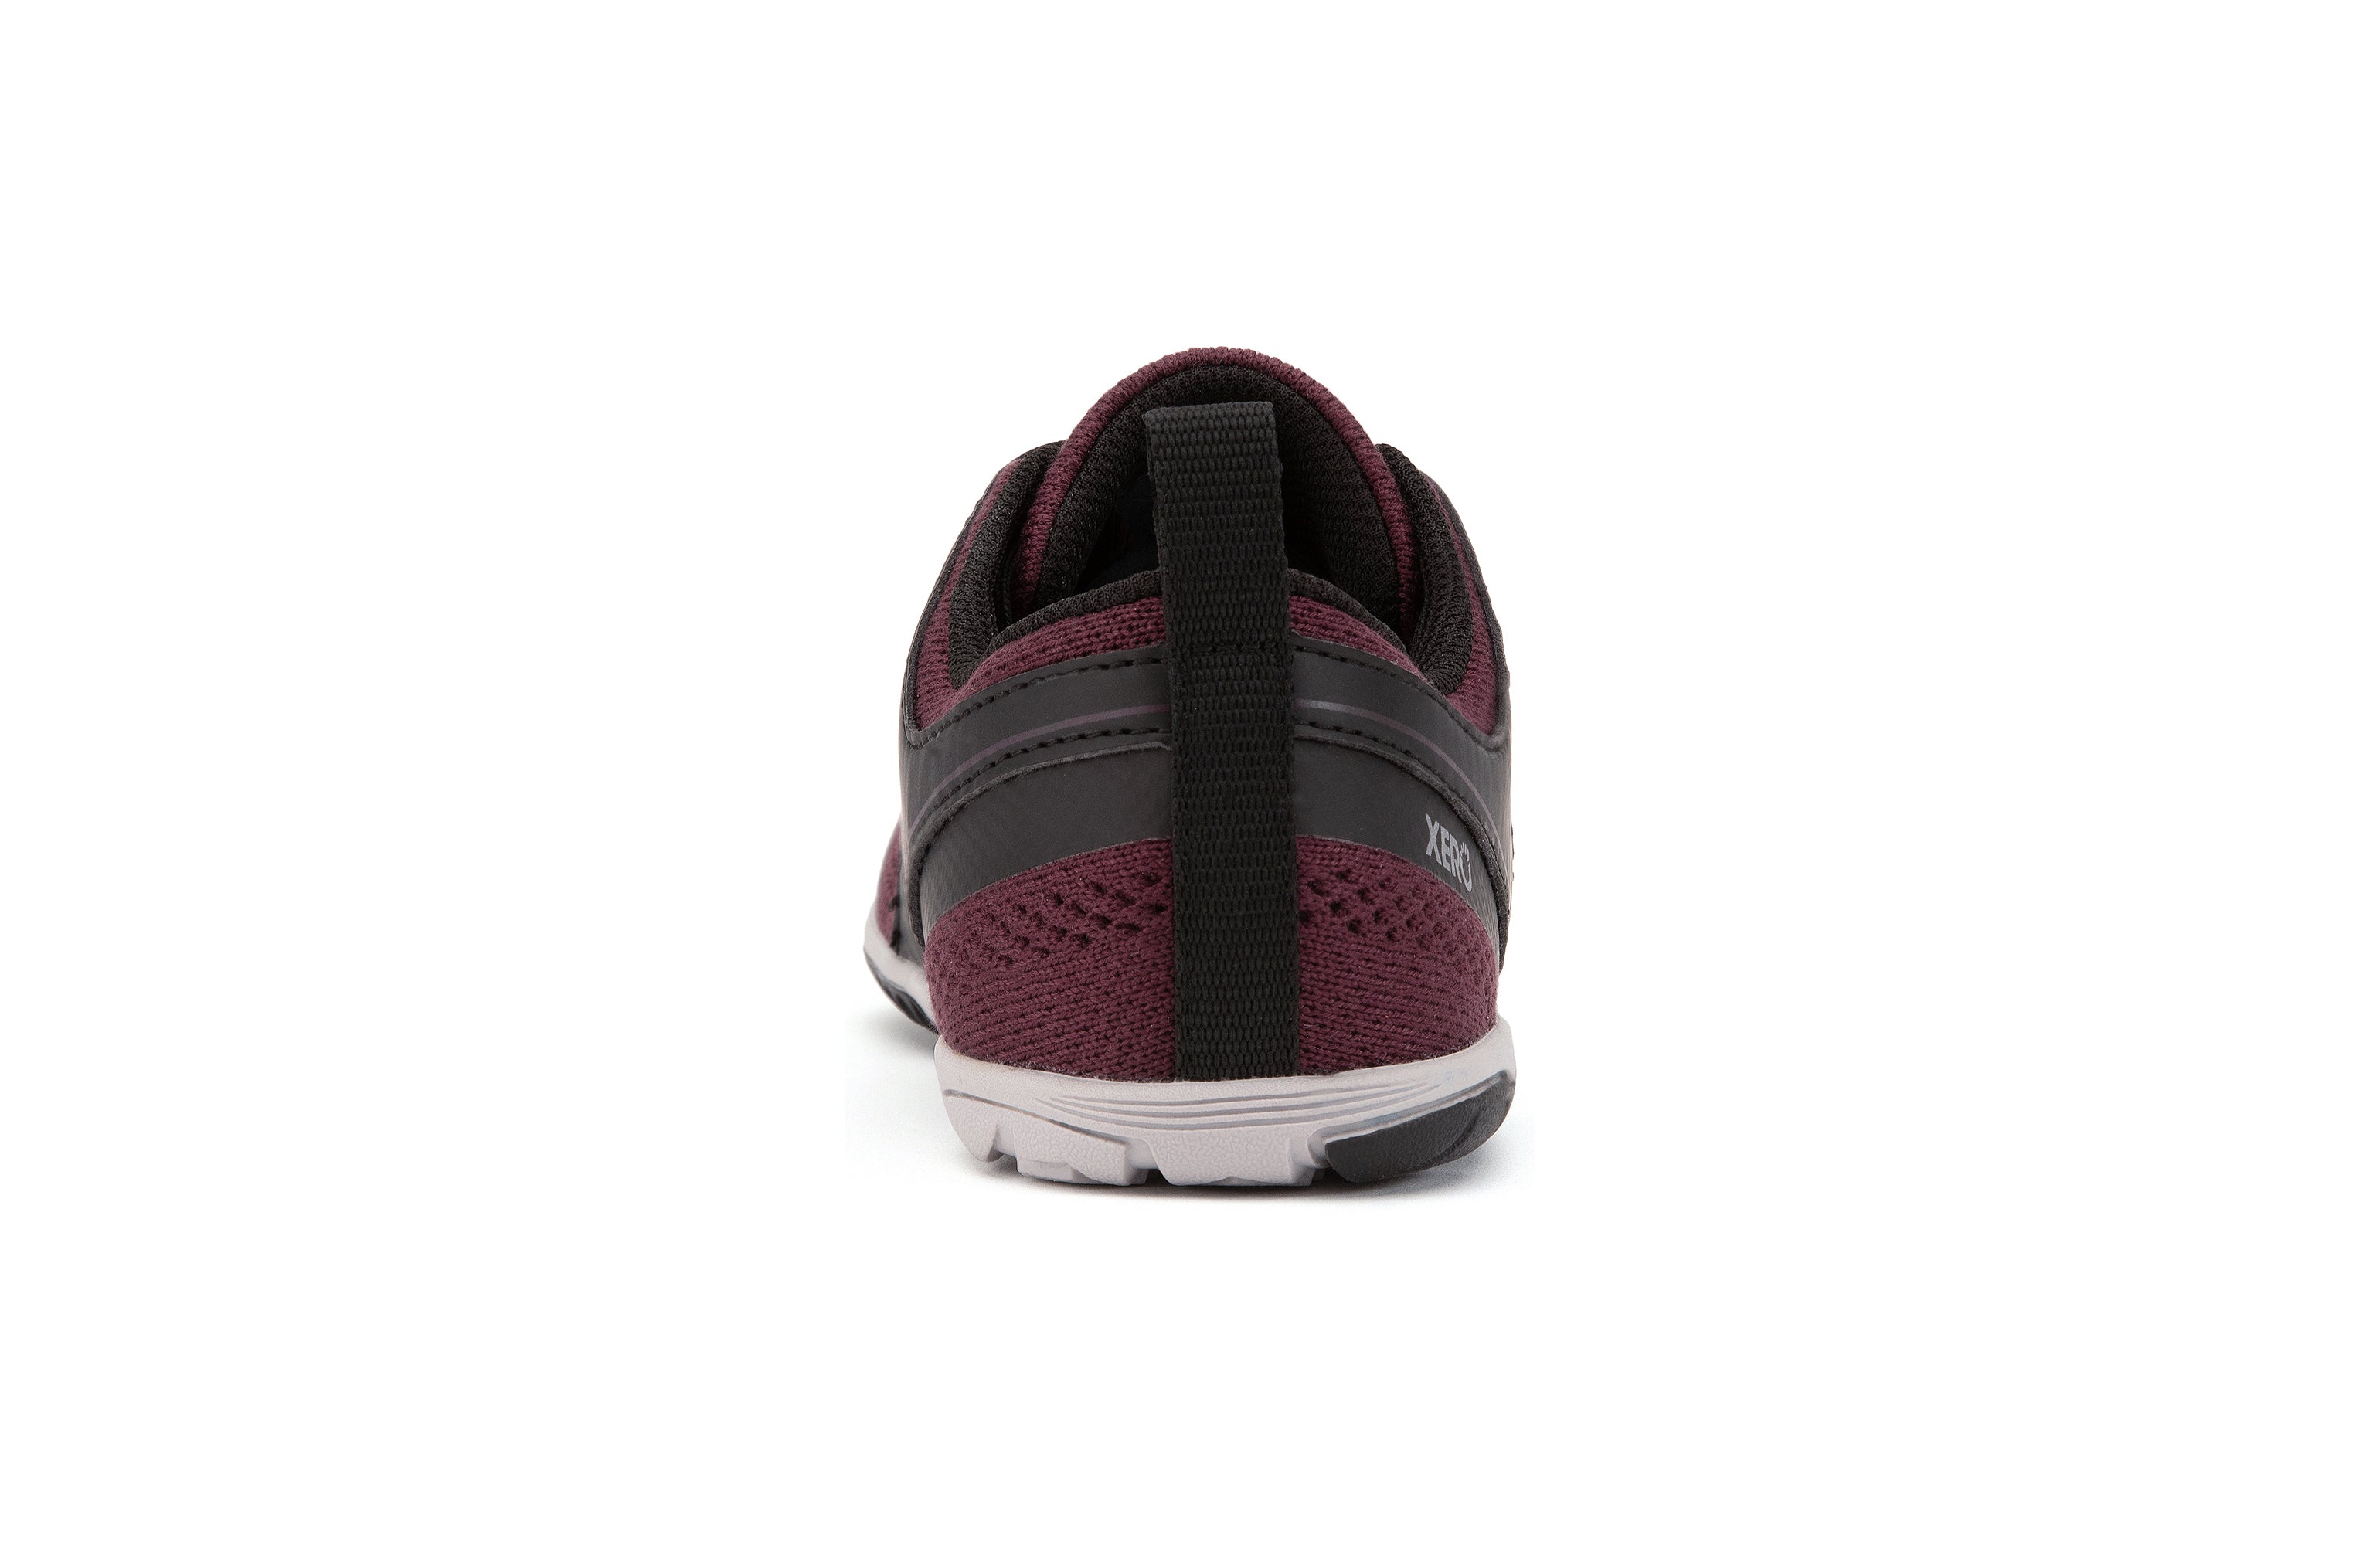 Xero Shoes Zelen Womens barfods træningssko til kvinder i farven fig / black, bagfra